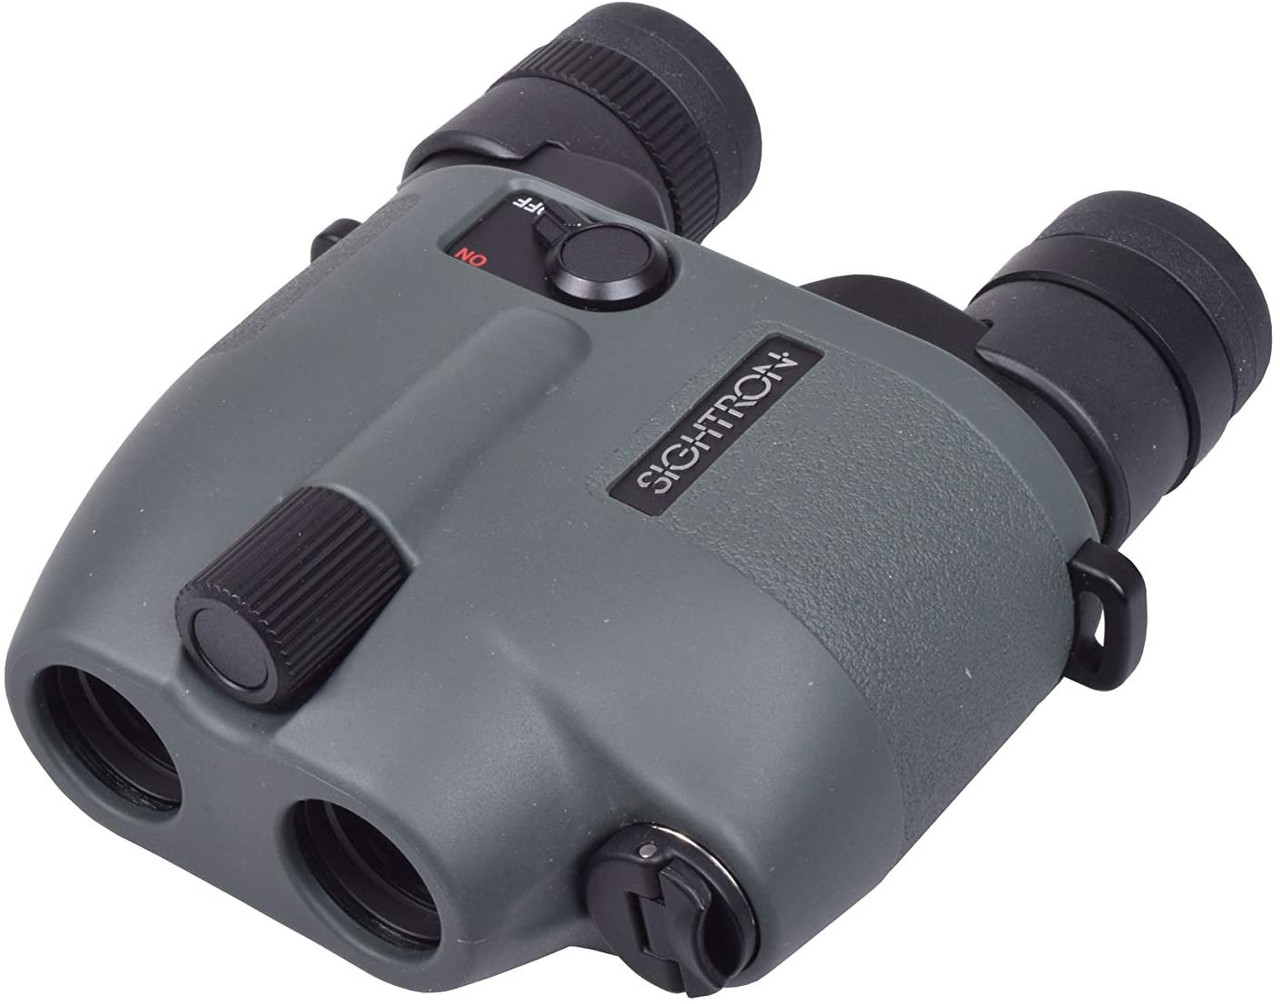 Sightron Binoculars Anti-Vibration SIBIL10x21 with image stabilization SIB40-1020